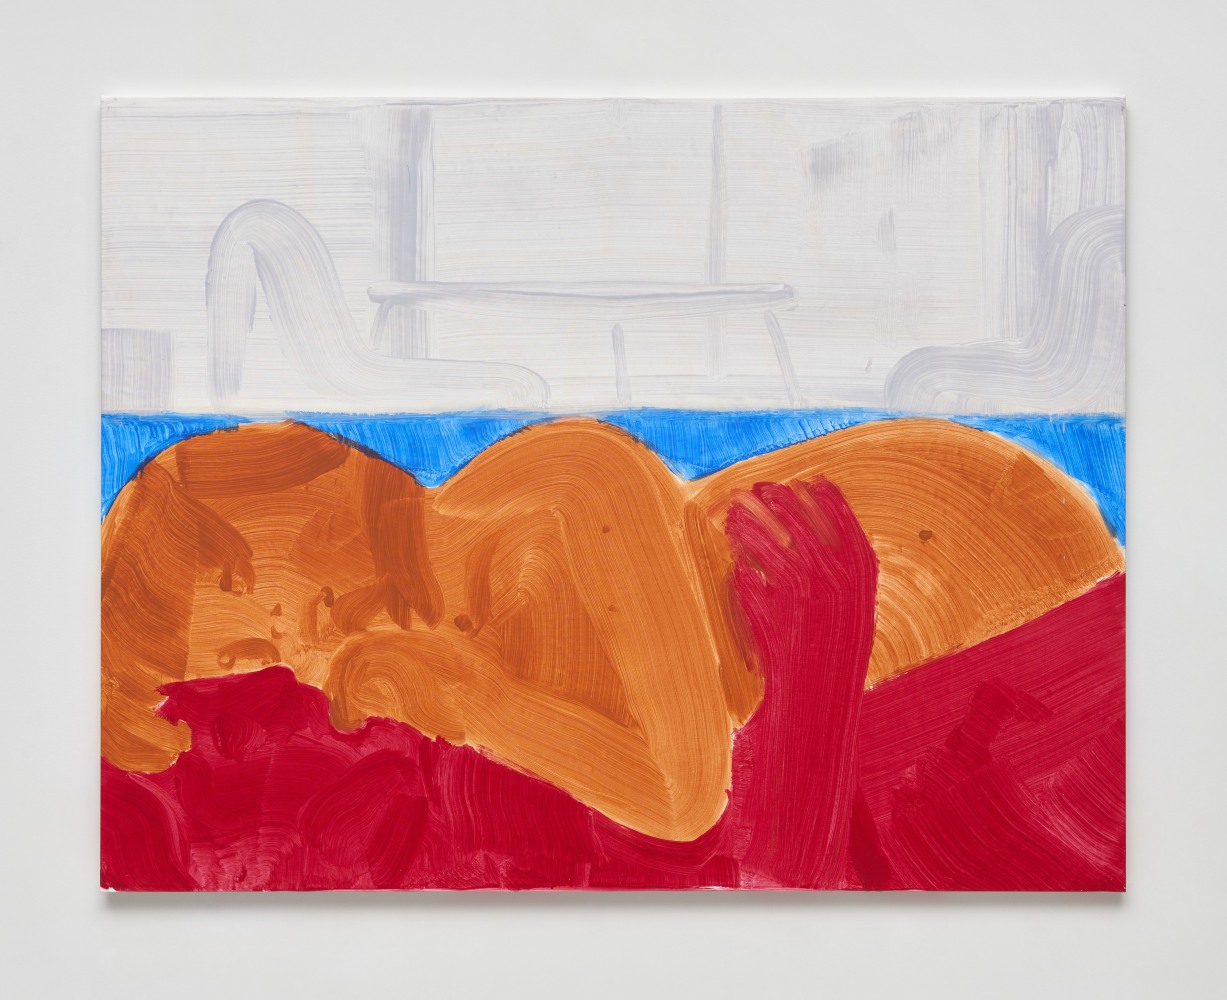 Philipp Kremer&amp;nbsp;

Couple (II-XIV),&amp;nbsp;2020

acrylic on canvas&amp;nbsp;

100h x 130 cm.&amp;nbsp;

40h x 51w in.